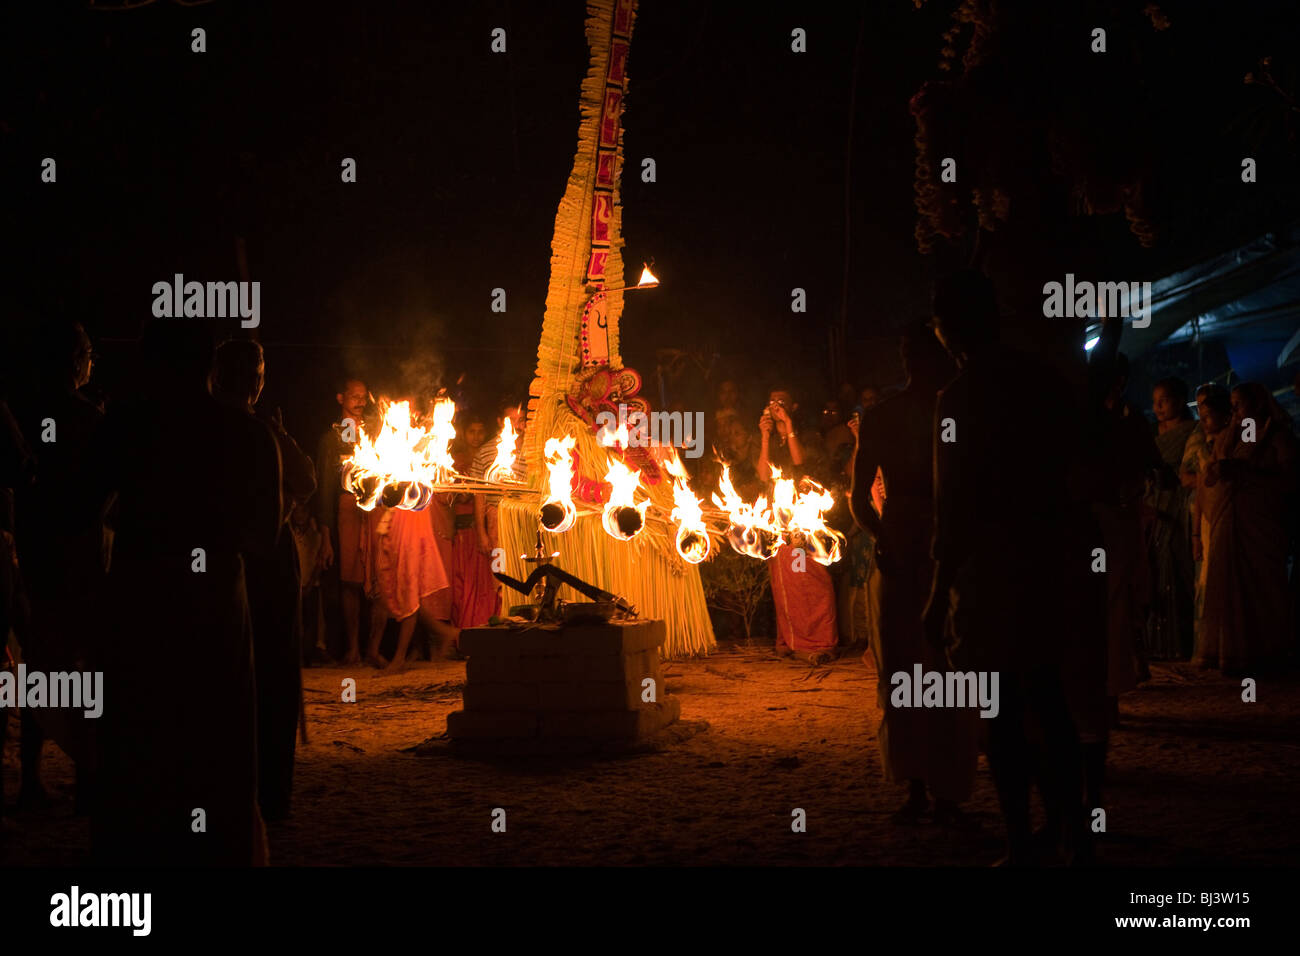 India, Kerala, Cannanore (Kannur), Theyyam, ancient folk art ritual, Agni-Ghandakaran dancing surrounded by flaming torches Stock Photo